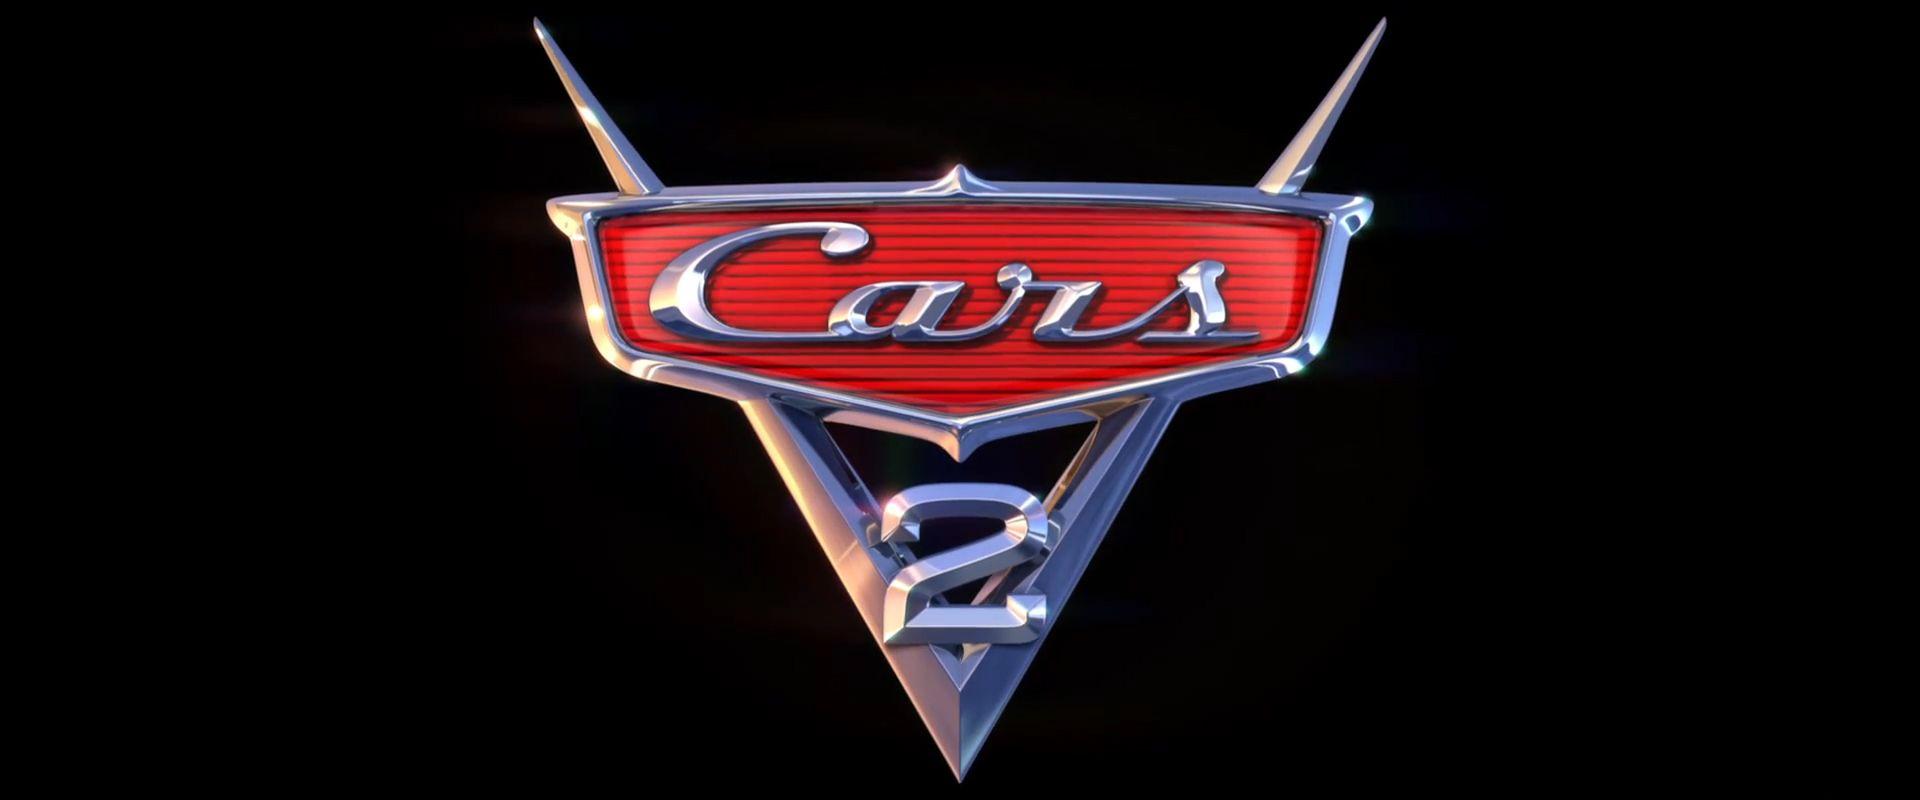 Cars Movie Logo - Image - 51 cars 2.jpg | Logopedia | FANDOM powered by Wikia